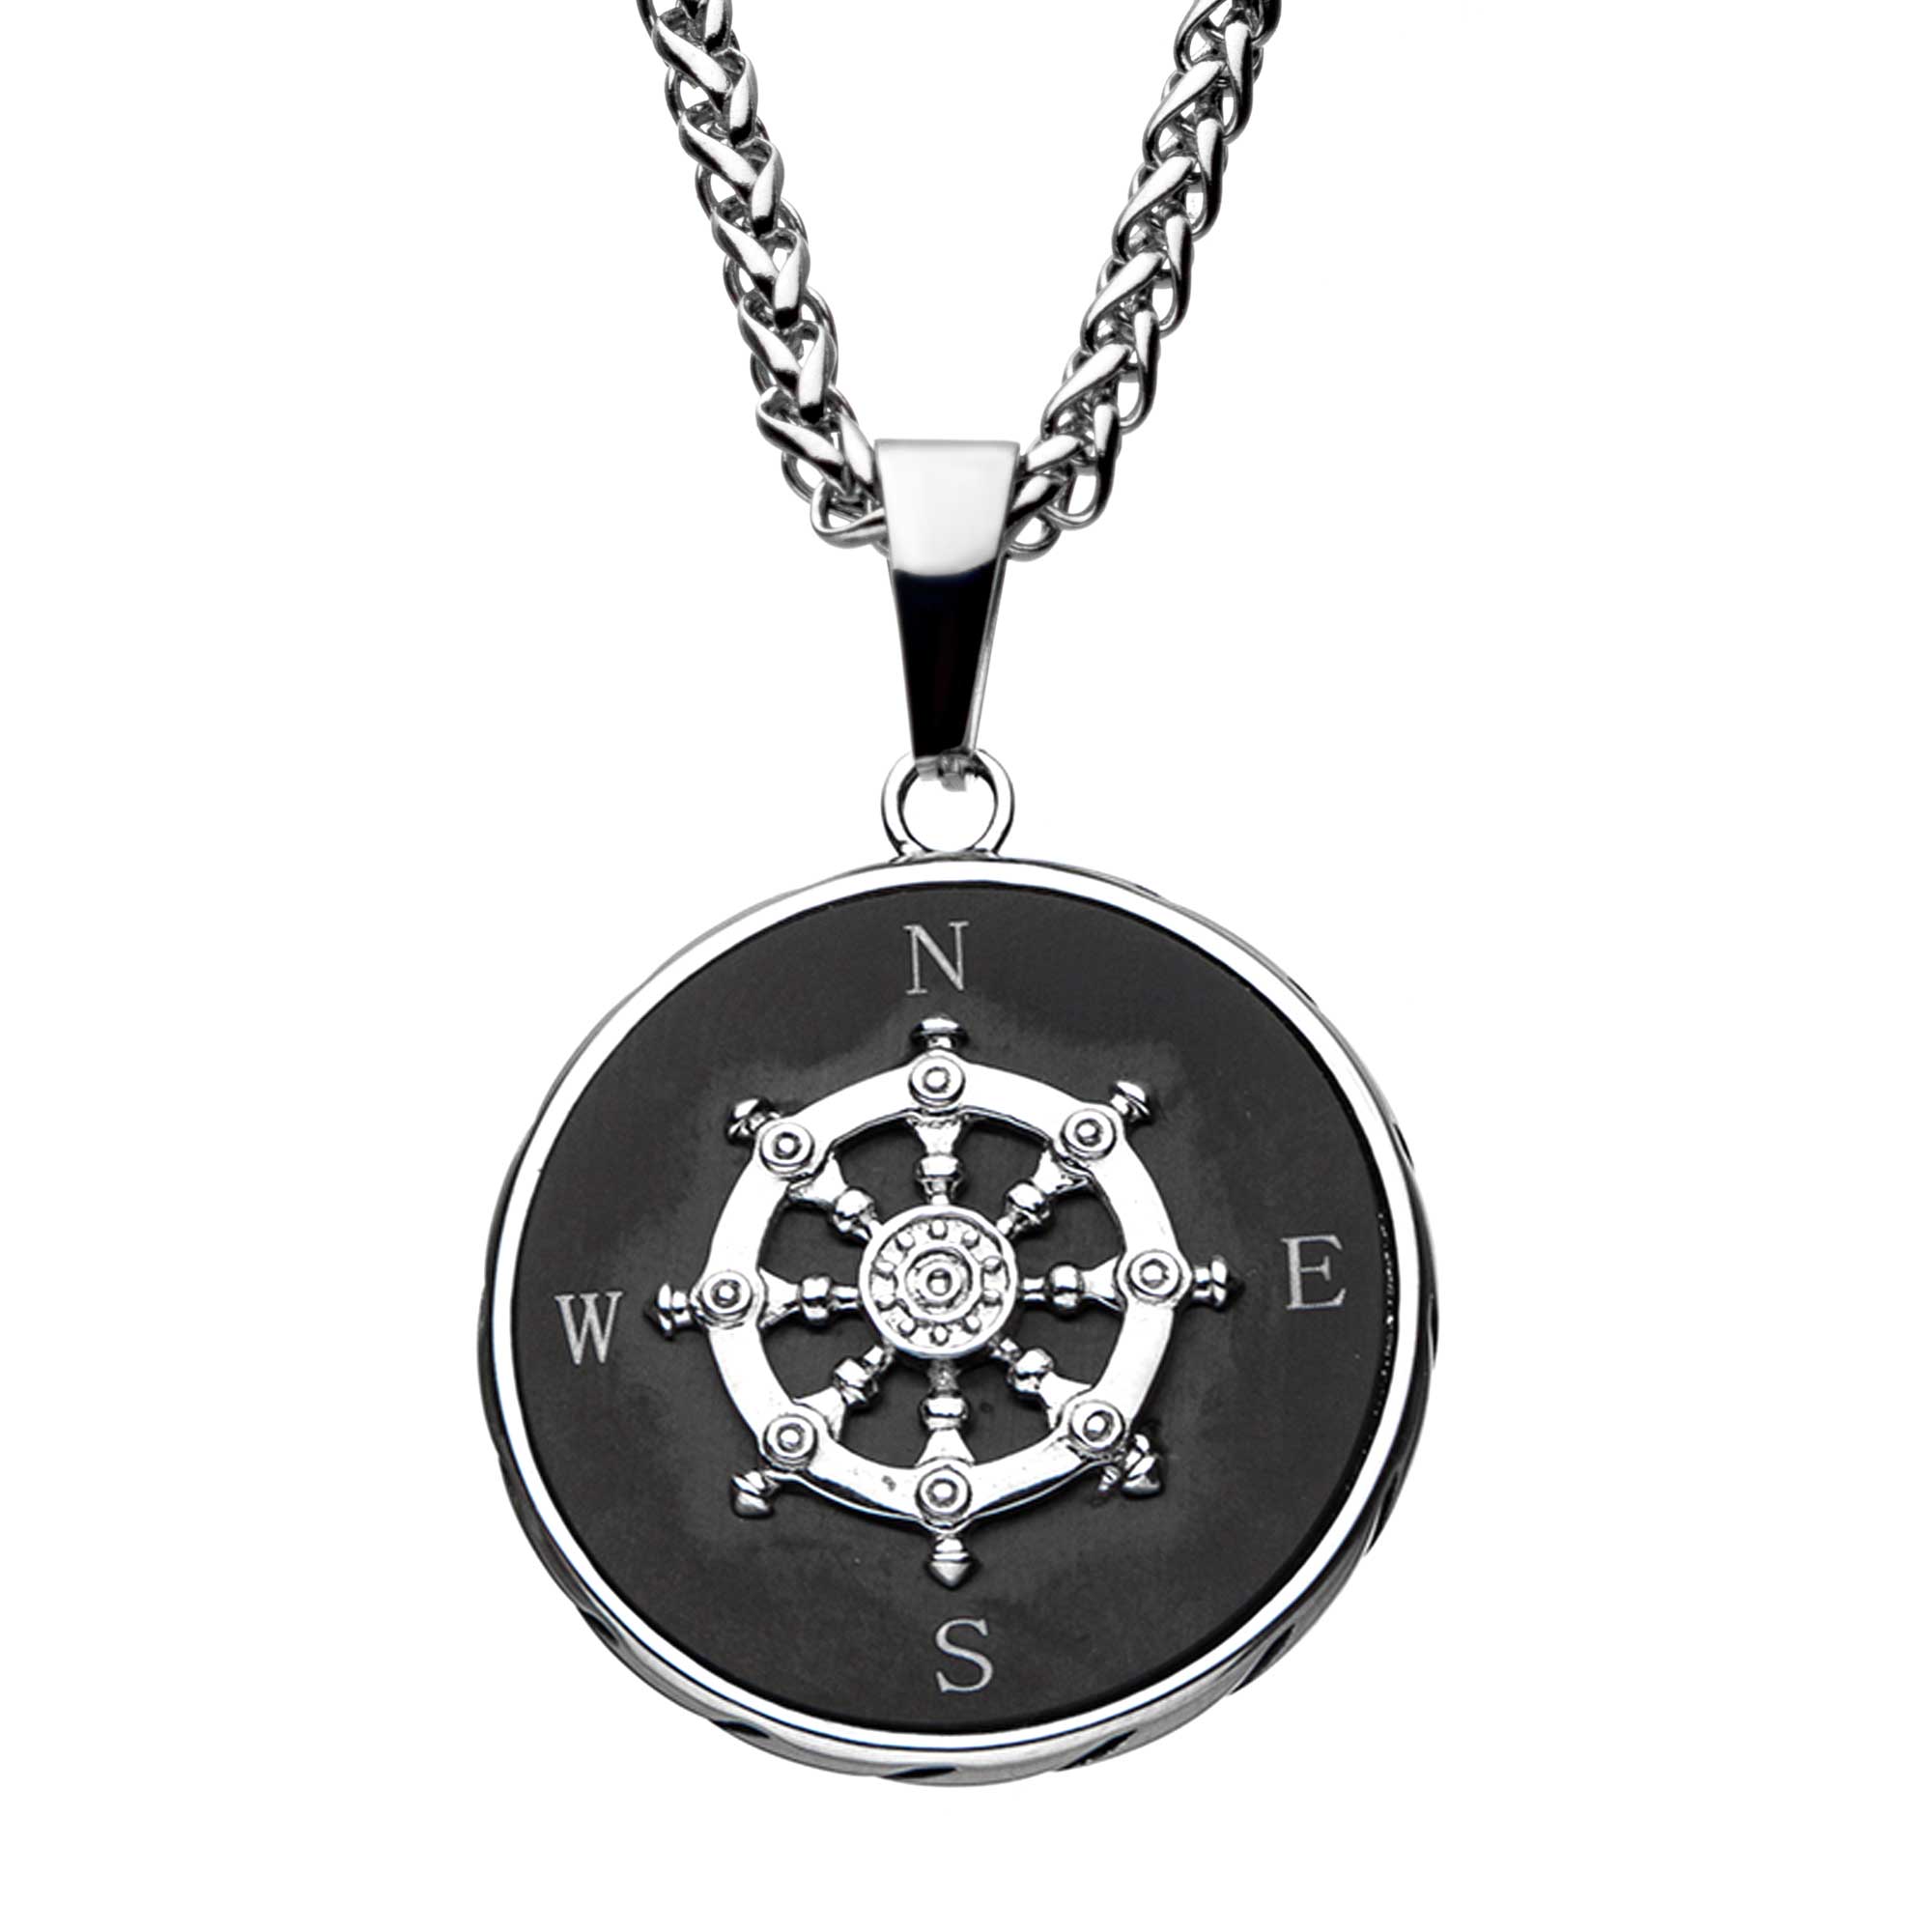 Stainless Steel Black Plated Ship's Wheel Compass Pendant with Chain Carroll / Ochs Jewelers Monroe, MI